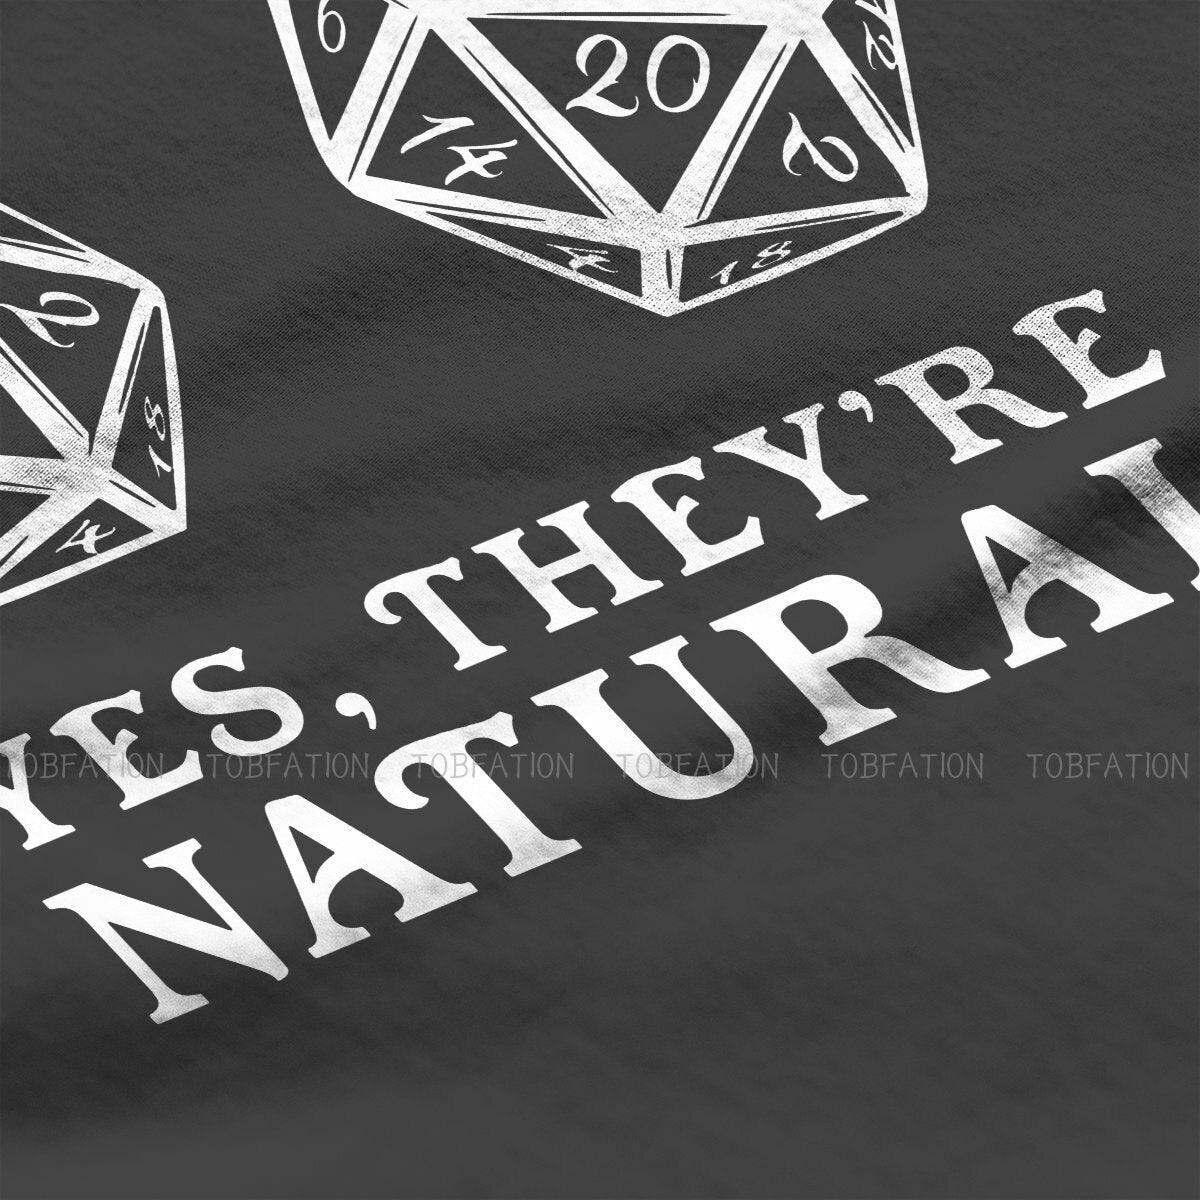 Natural 20 Dice Shirt "Yes They're Natural" - Mini Megastore